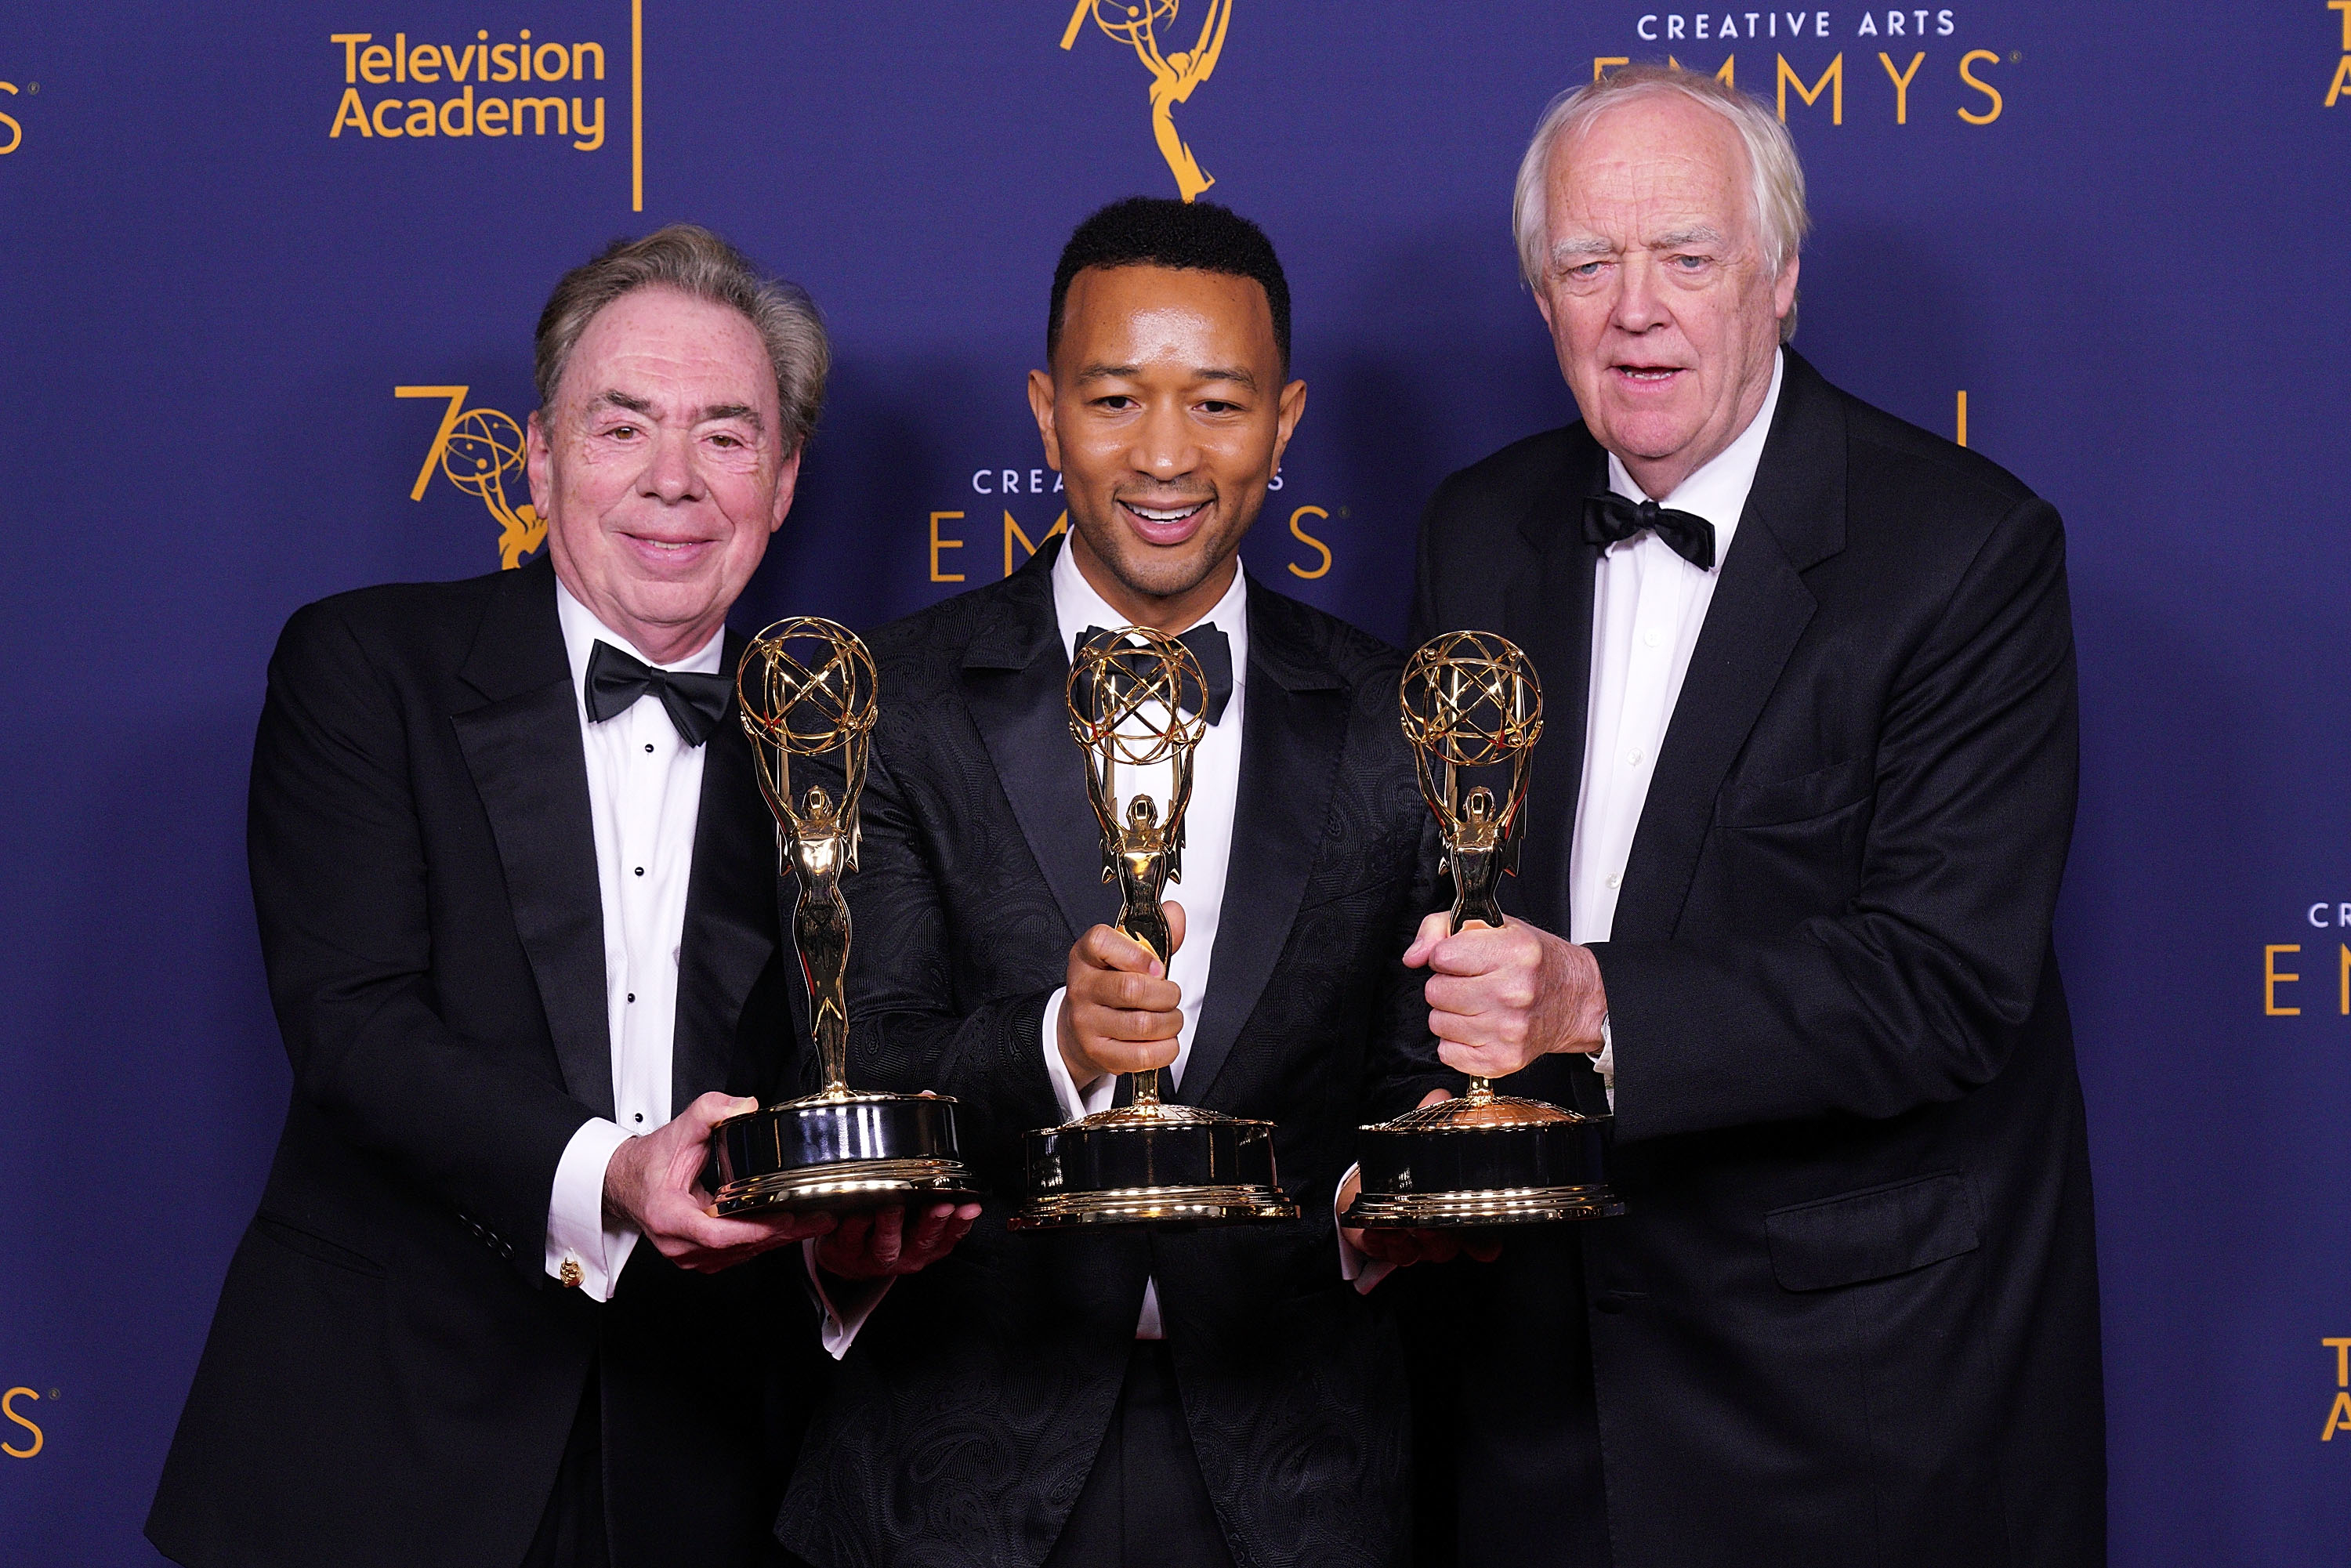 Andrew Lloyd Webber, John Legend and Tim Rice holding their Emmys